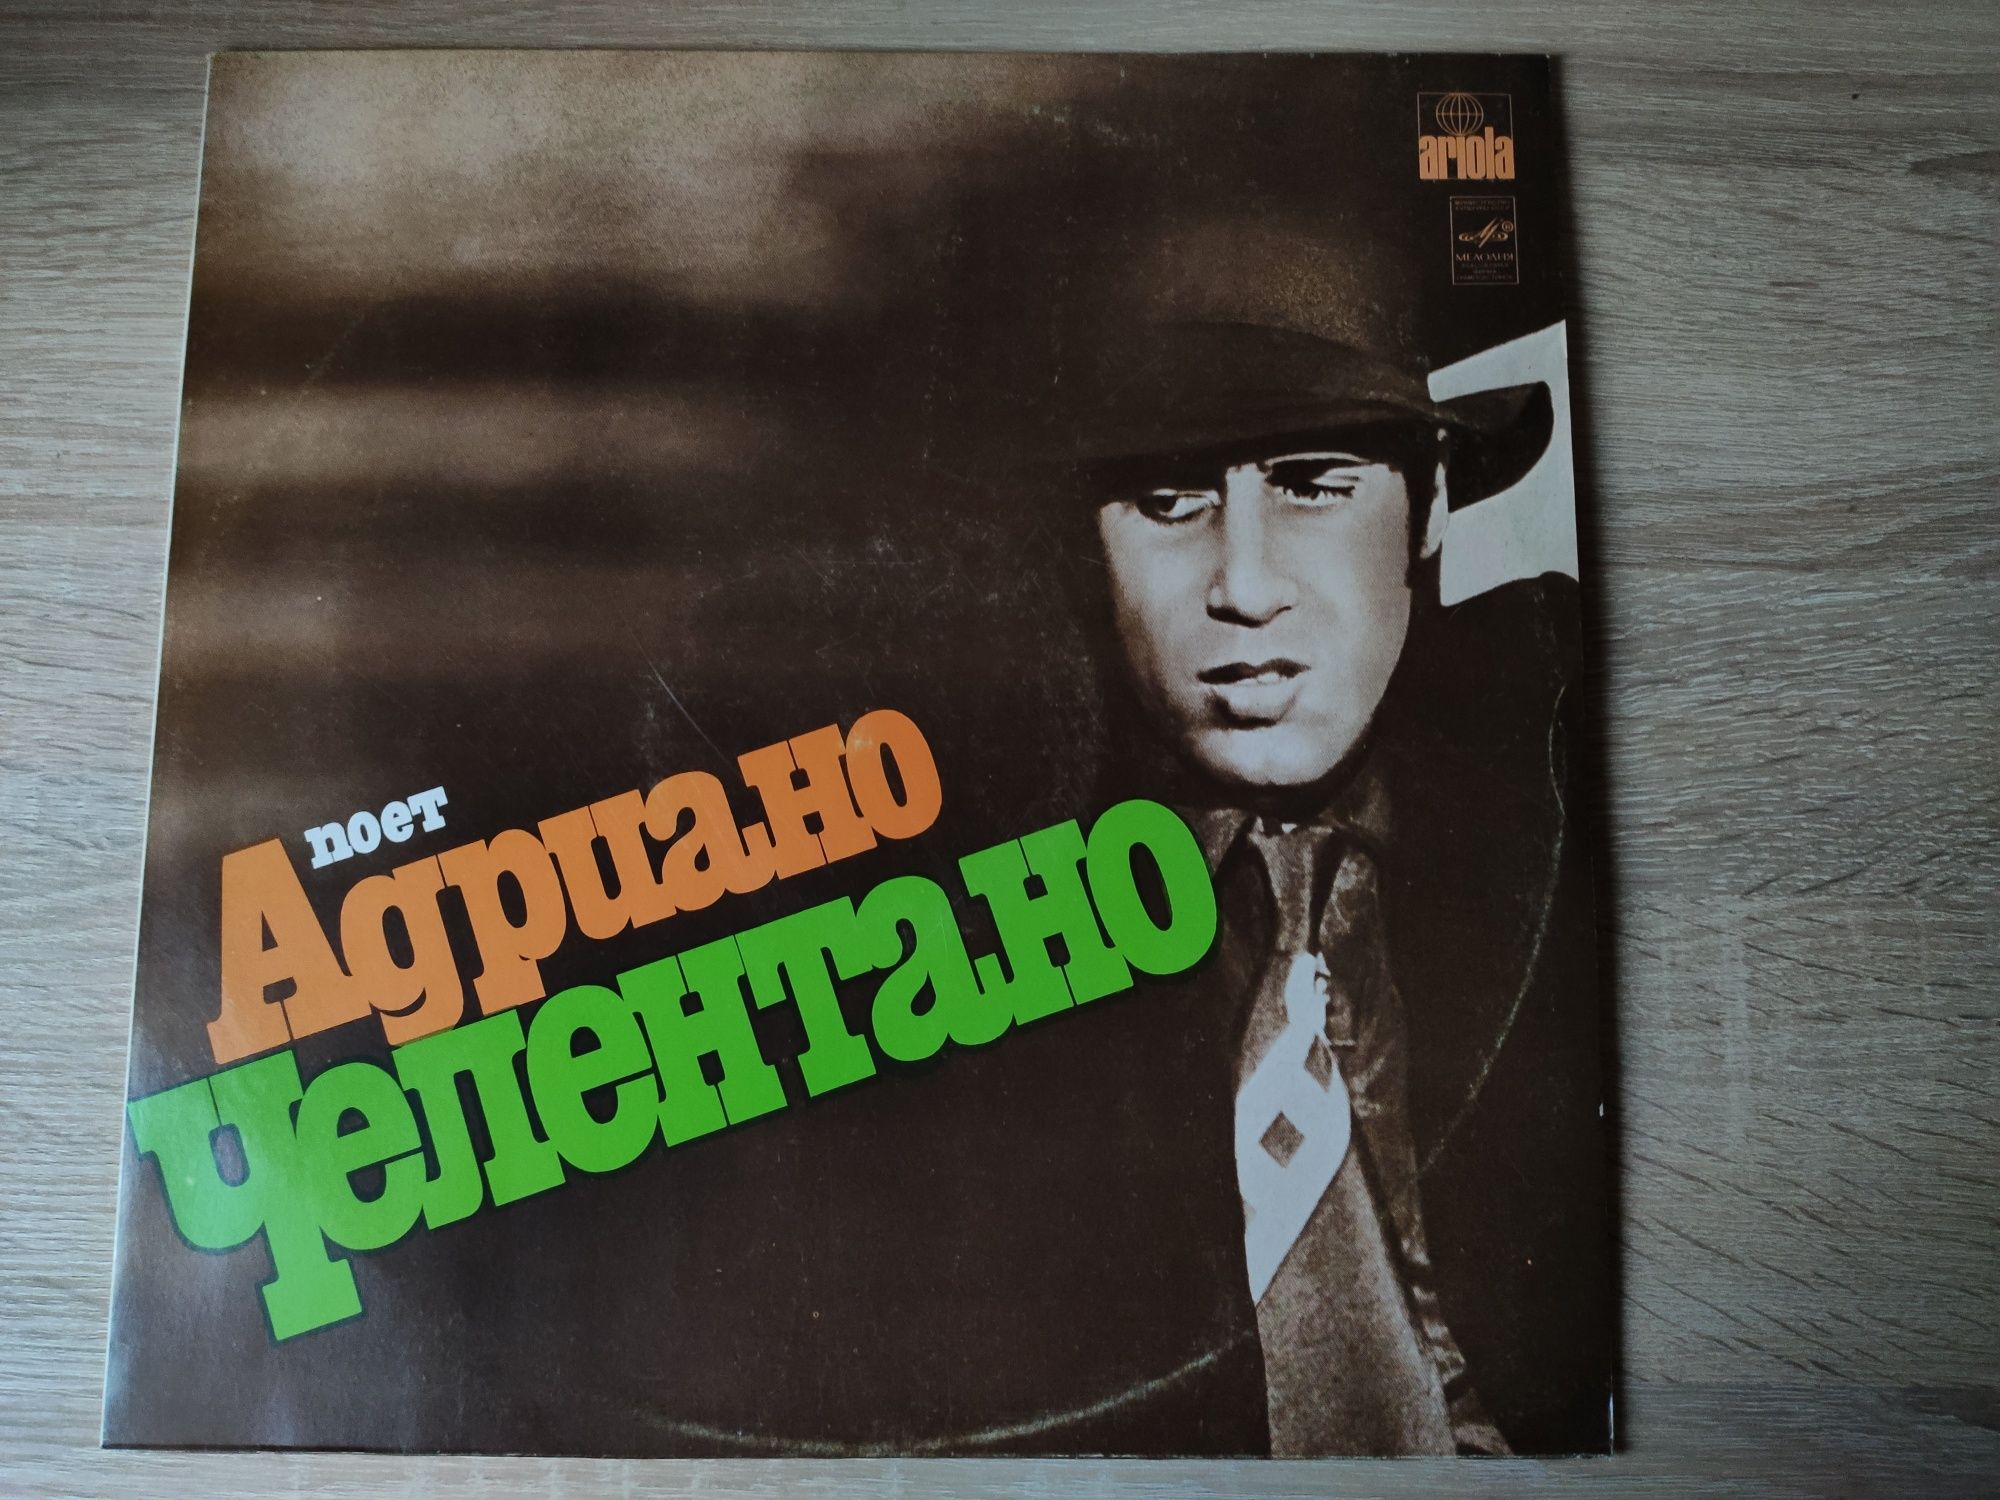 Поёт Адриано Челентано 1981 LP vinyl пластинка СССР